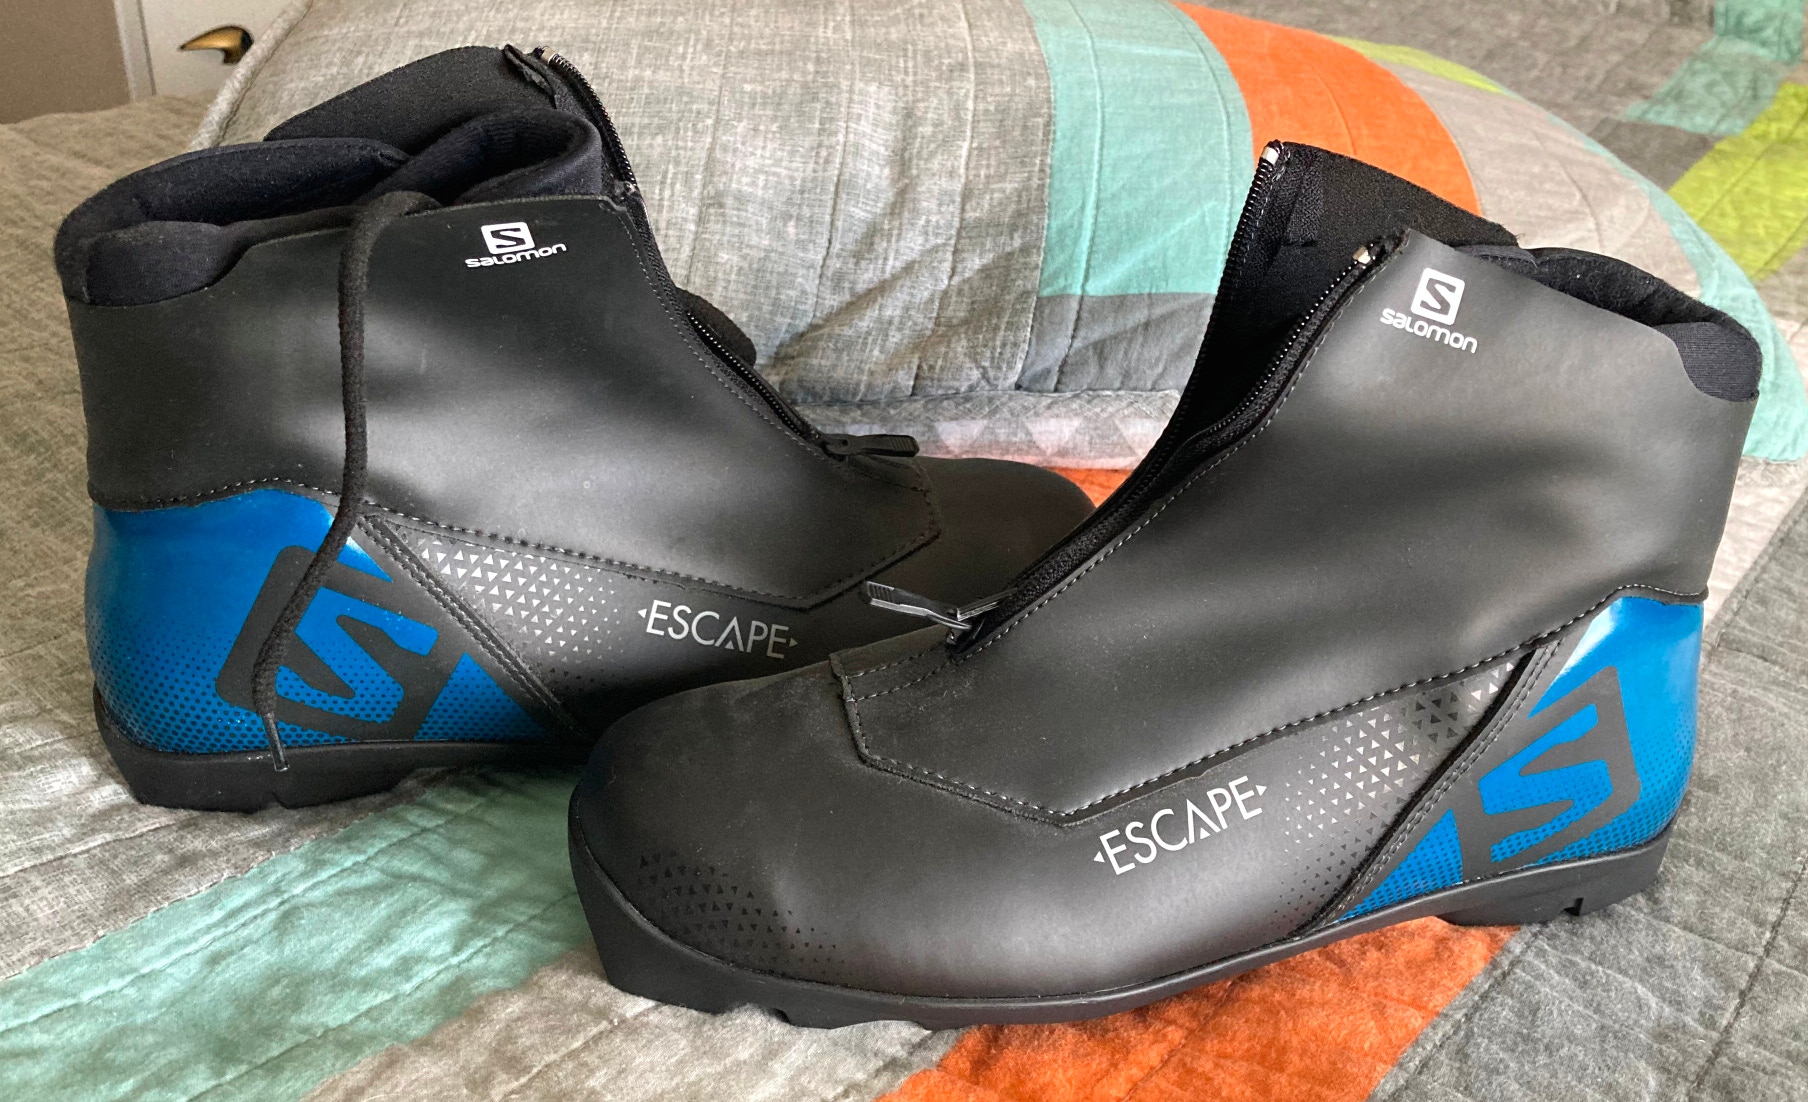 Brand New Classic Size 9.0 Salomon Cross Country Ski Boots